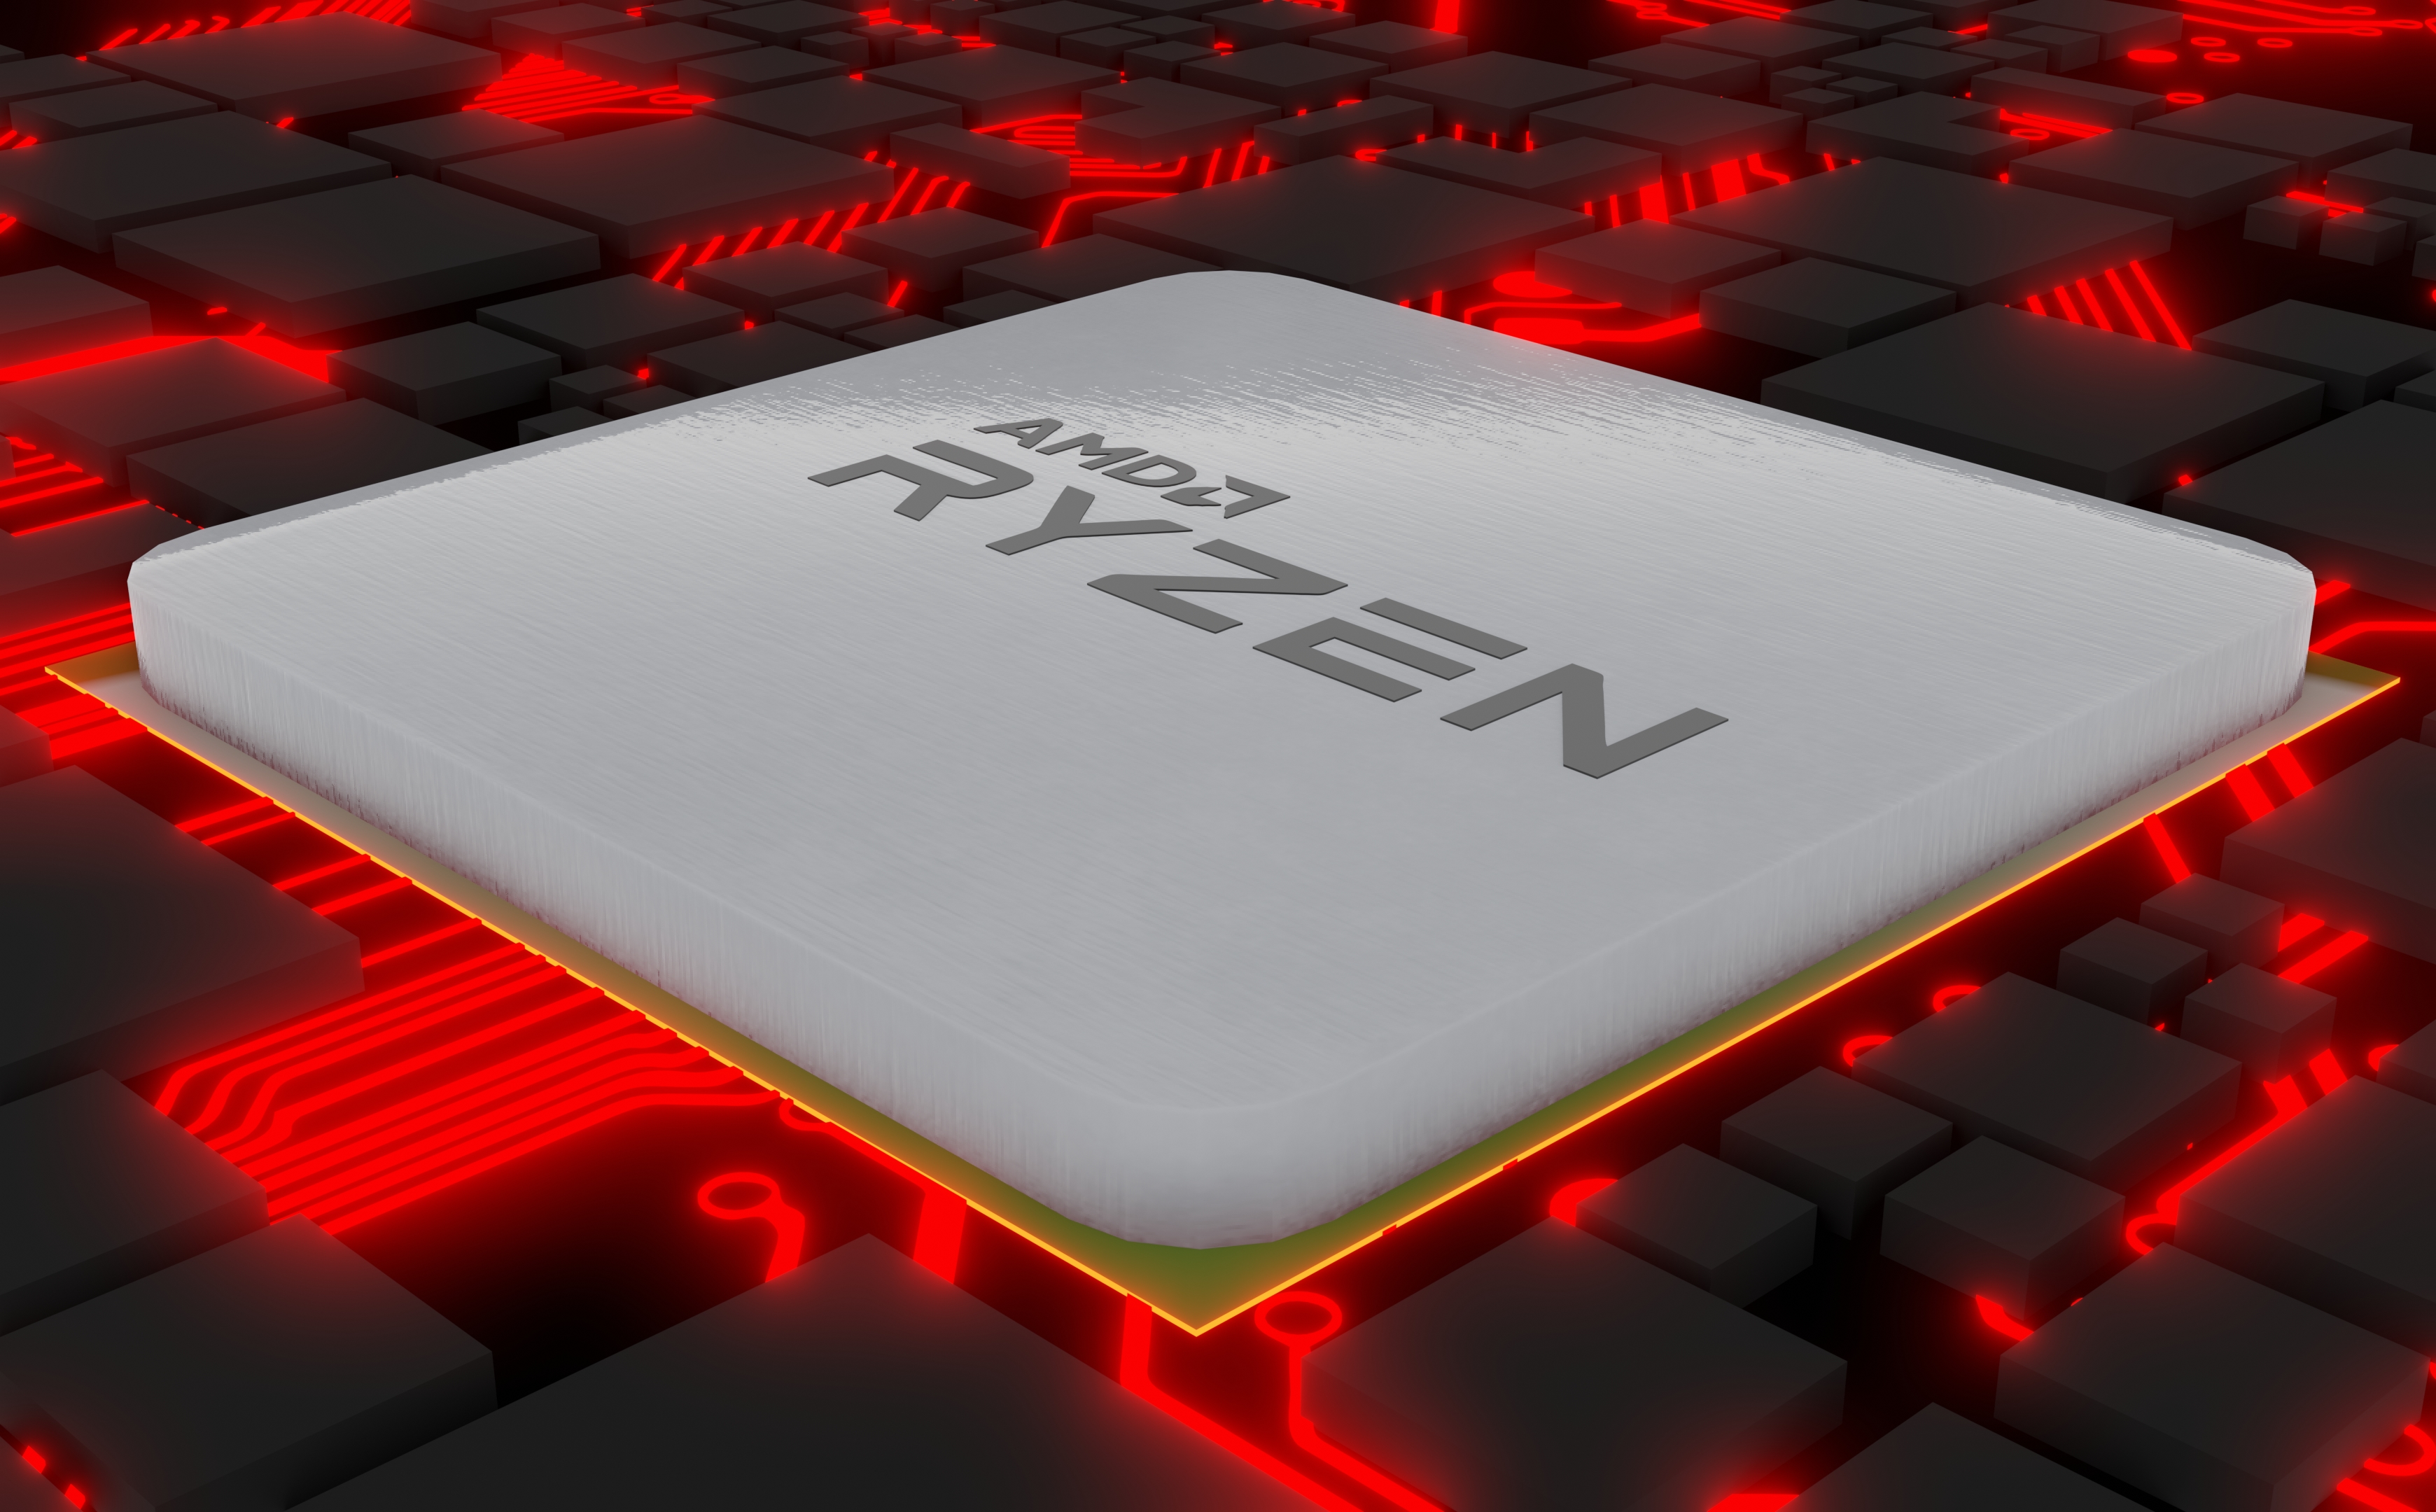 Technology AMD Ryzen HD Wallpaper | Background Image